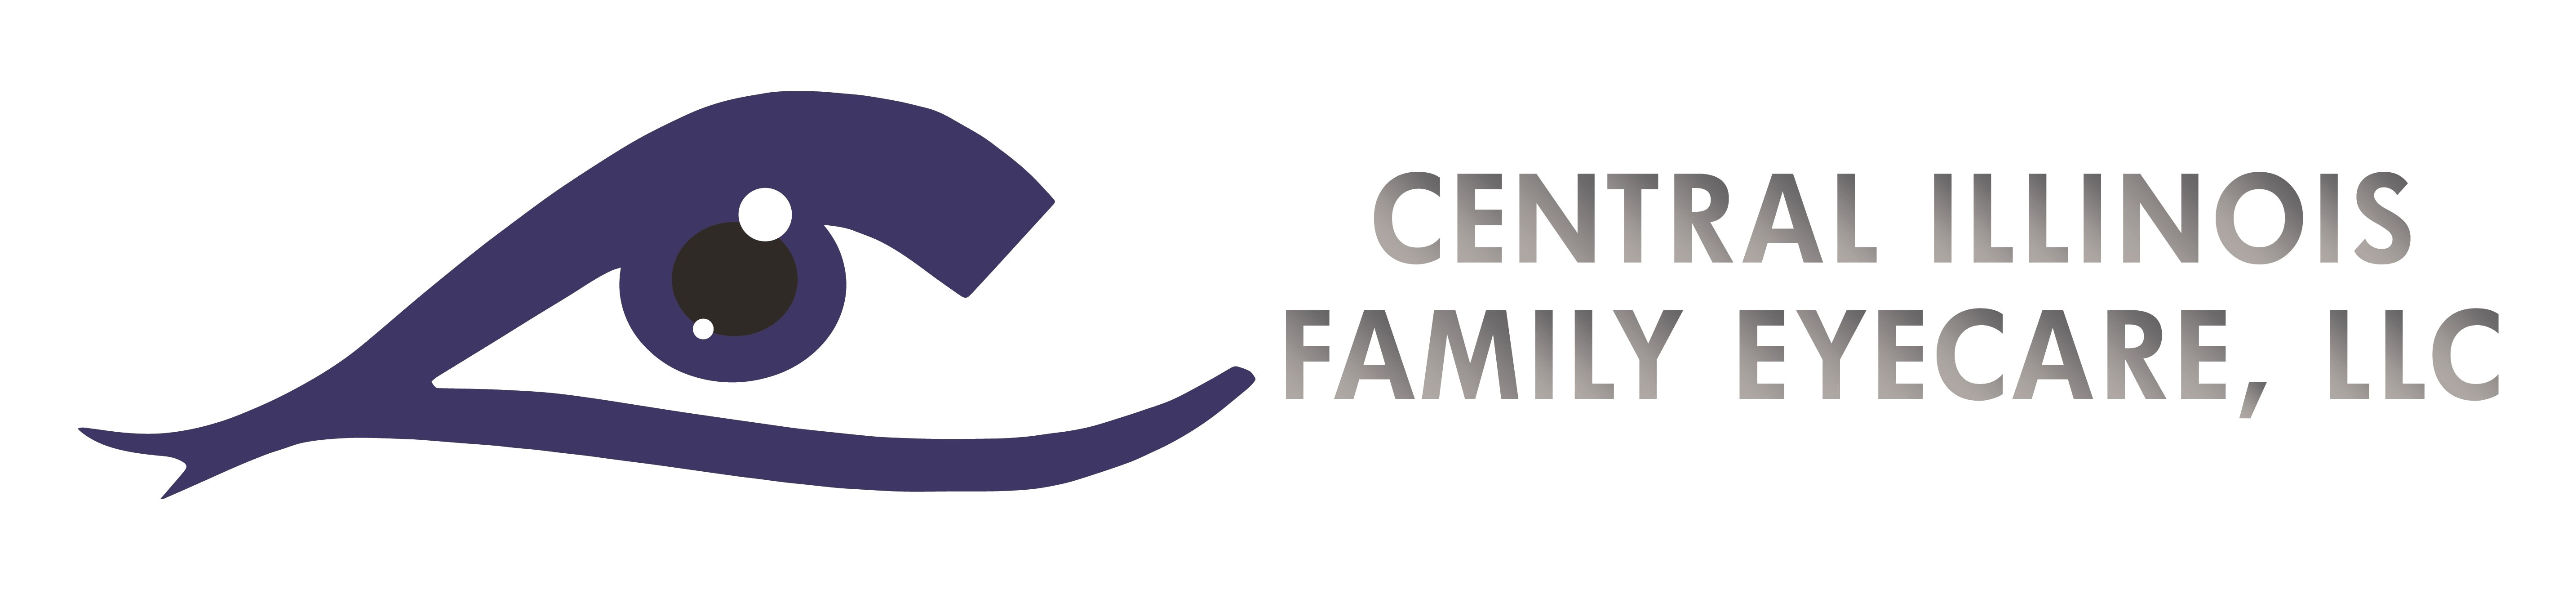 central illinois family eyecare